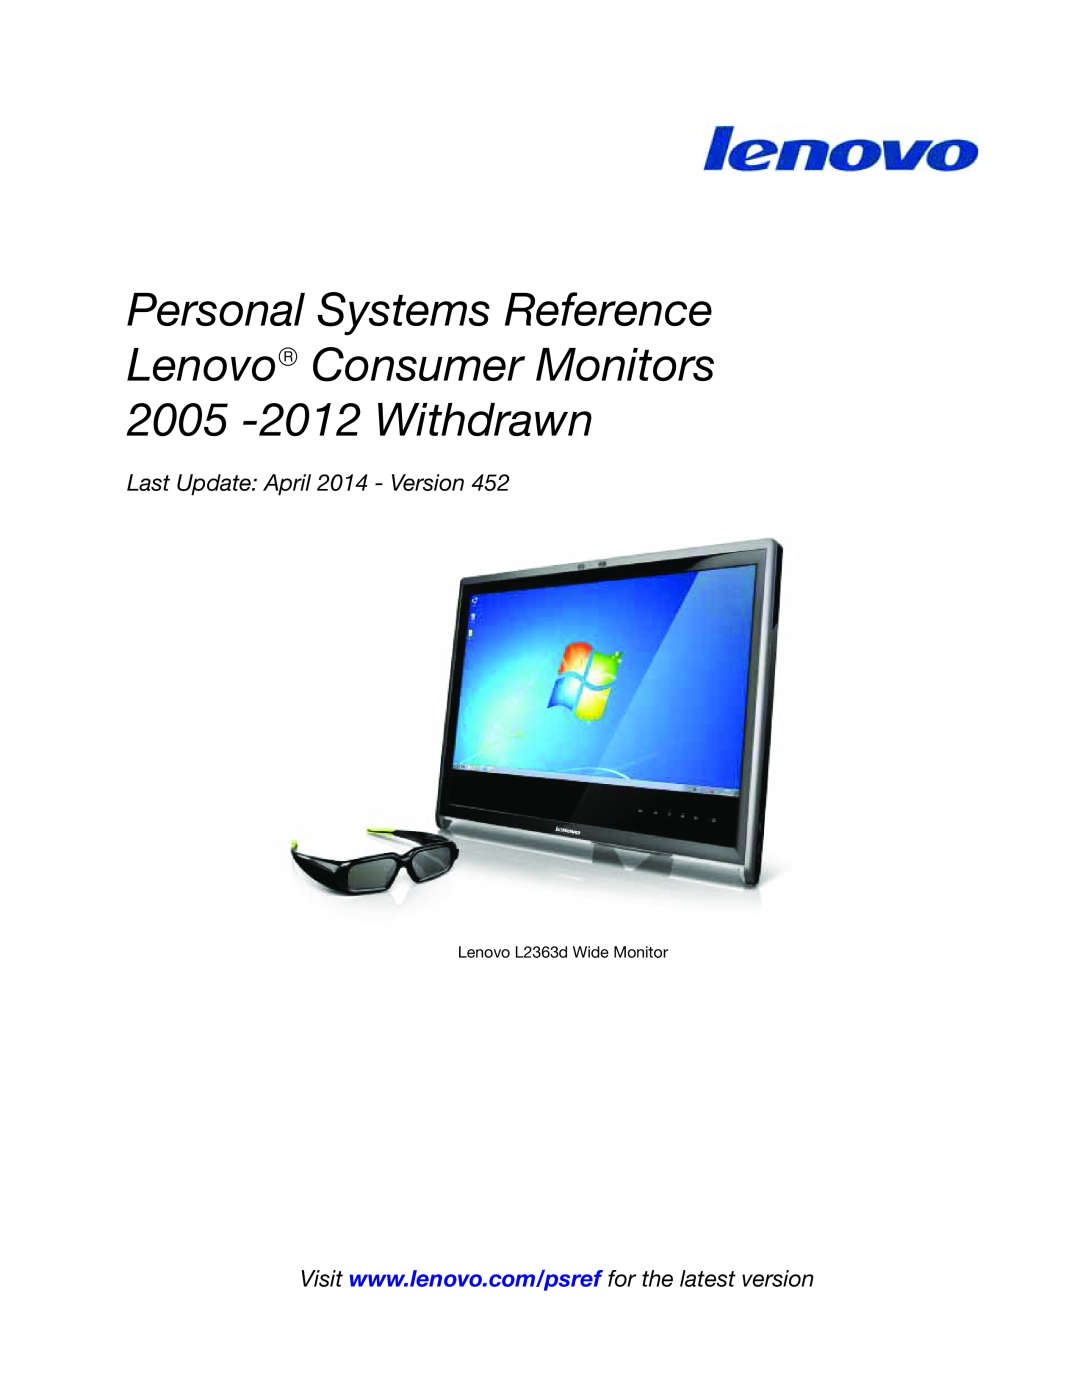 Lenovo L2363D manual Personal Systems Reference, Lenovo→ Consumer Monitors 2005 -2012Withdrawn, Lenovo L2363d Wide Monitor 